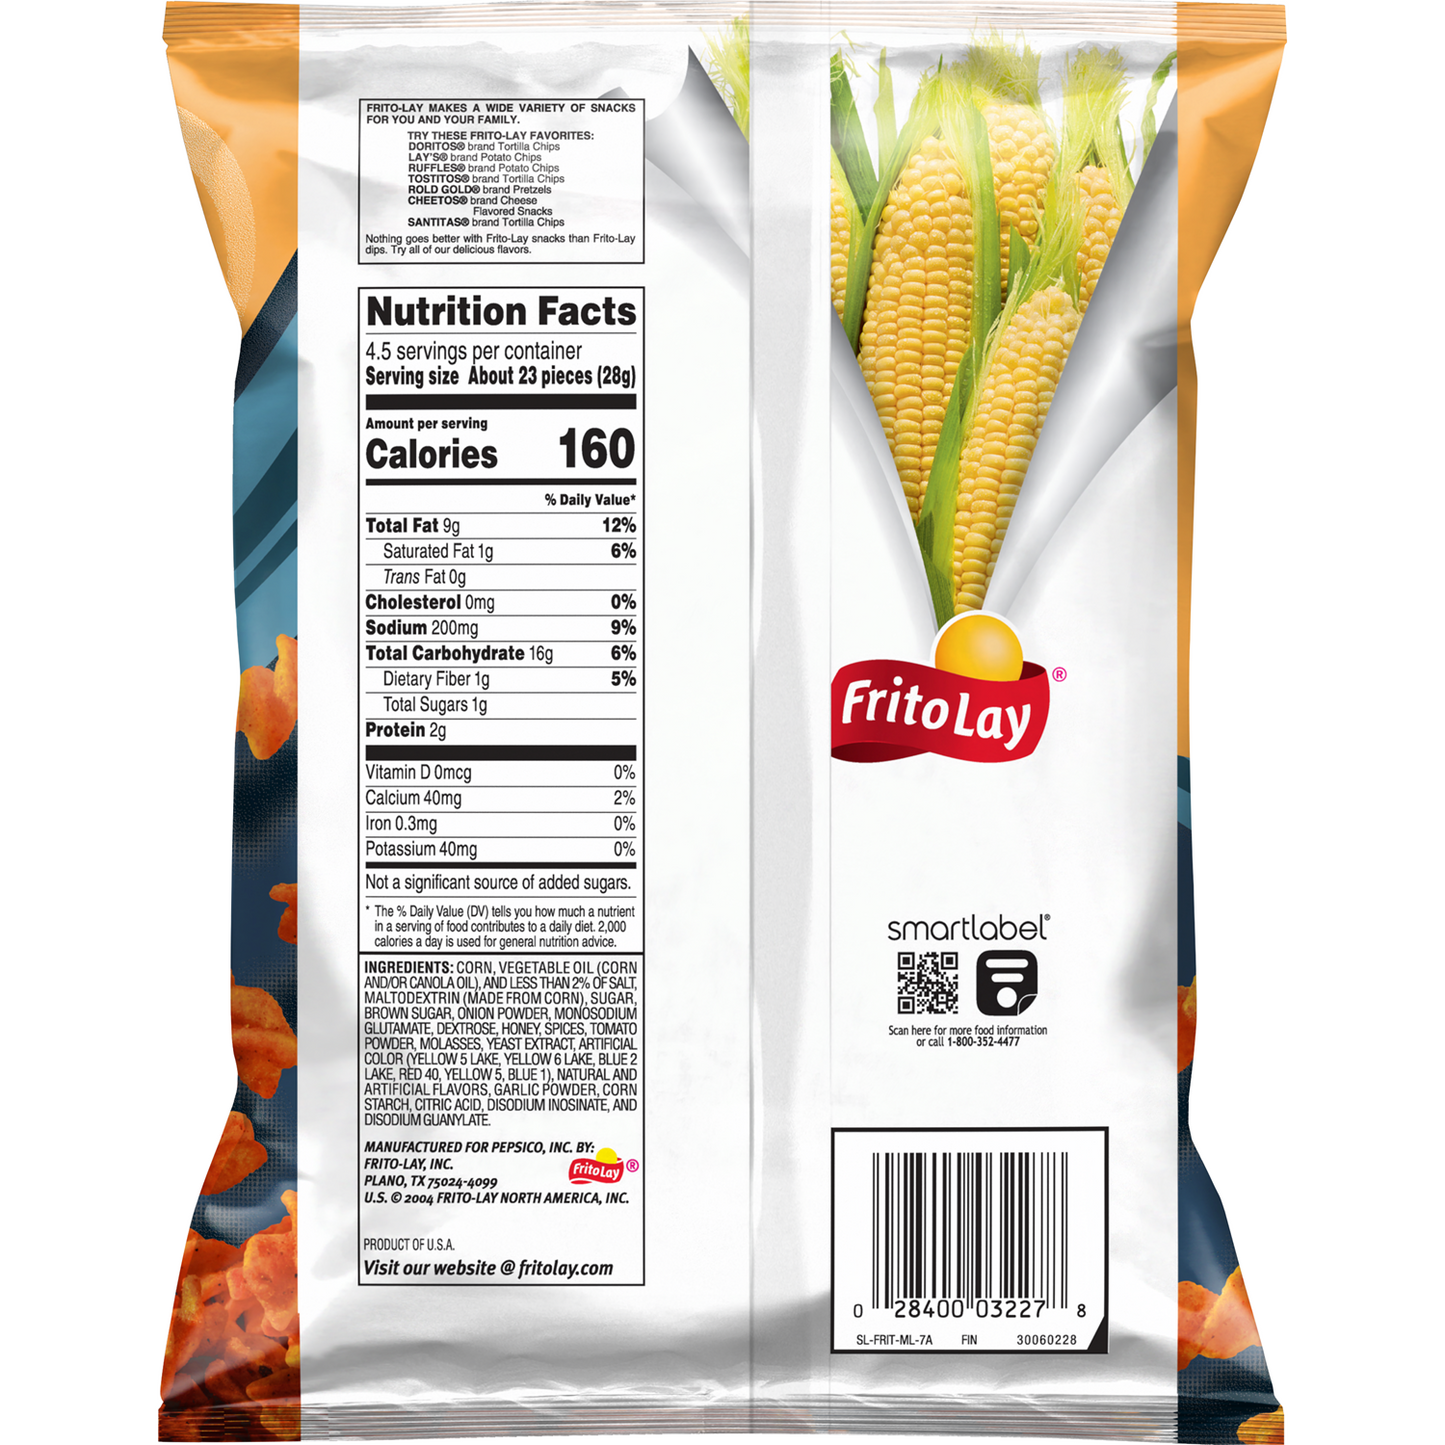 Fritos Flavor Twist Honey BBQ Chips, 4.5OZ(127.5gm) - Export